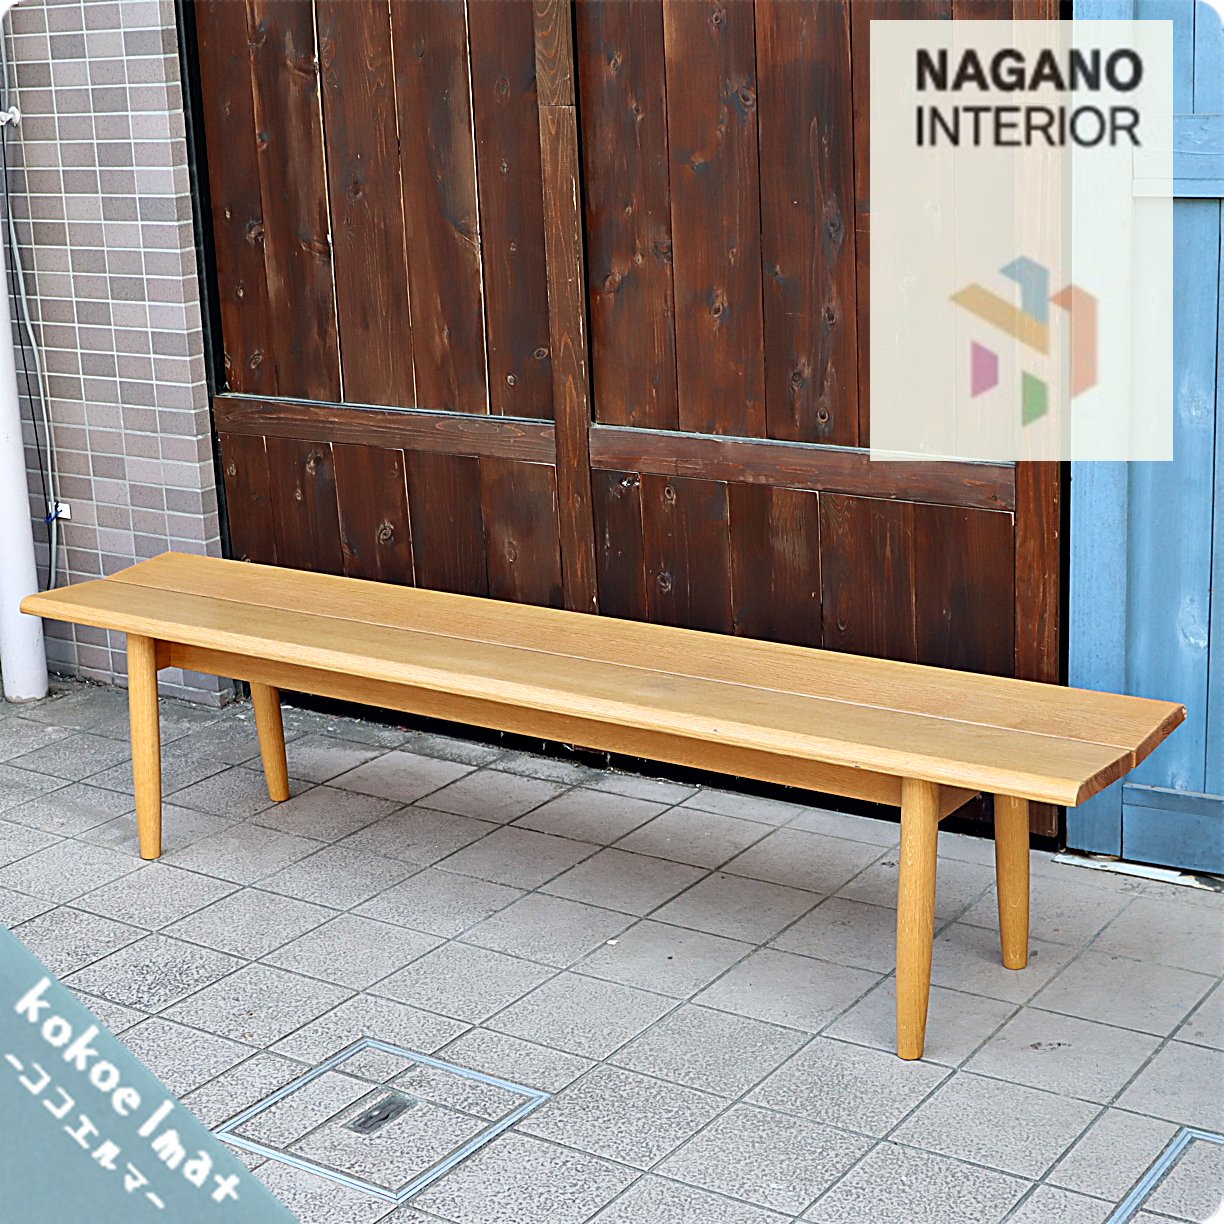 NAGANO INTERIOR(ナガノインテリア)のタモ無垢材を使用したダイニング